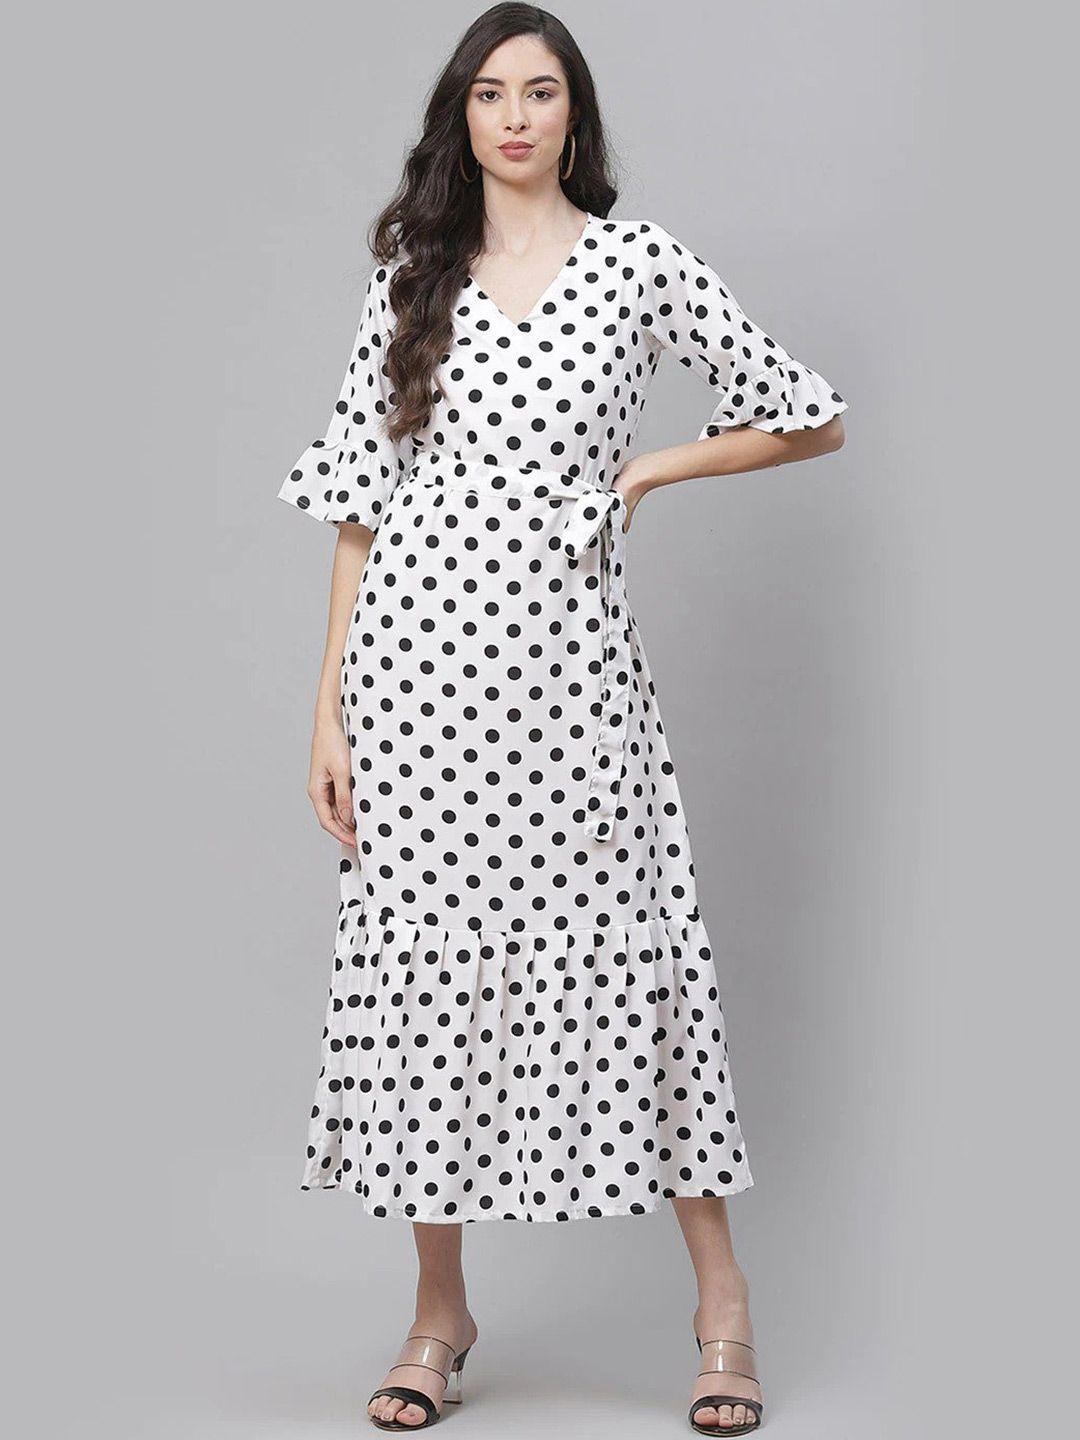 sleek italia bell sleeves polka dot printed crepe fit & flare midi dress